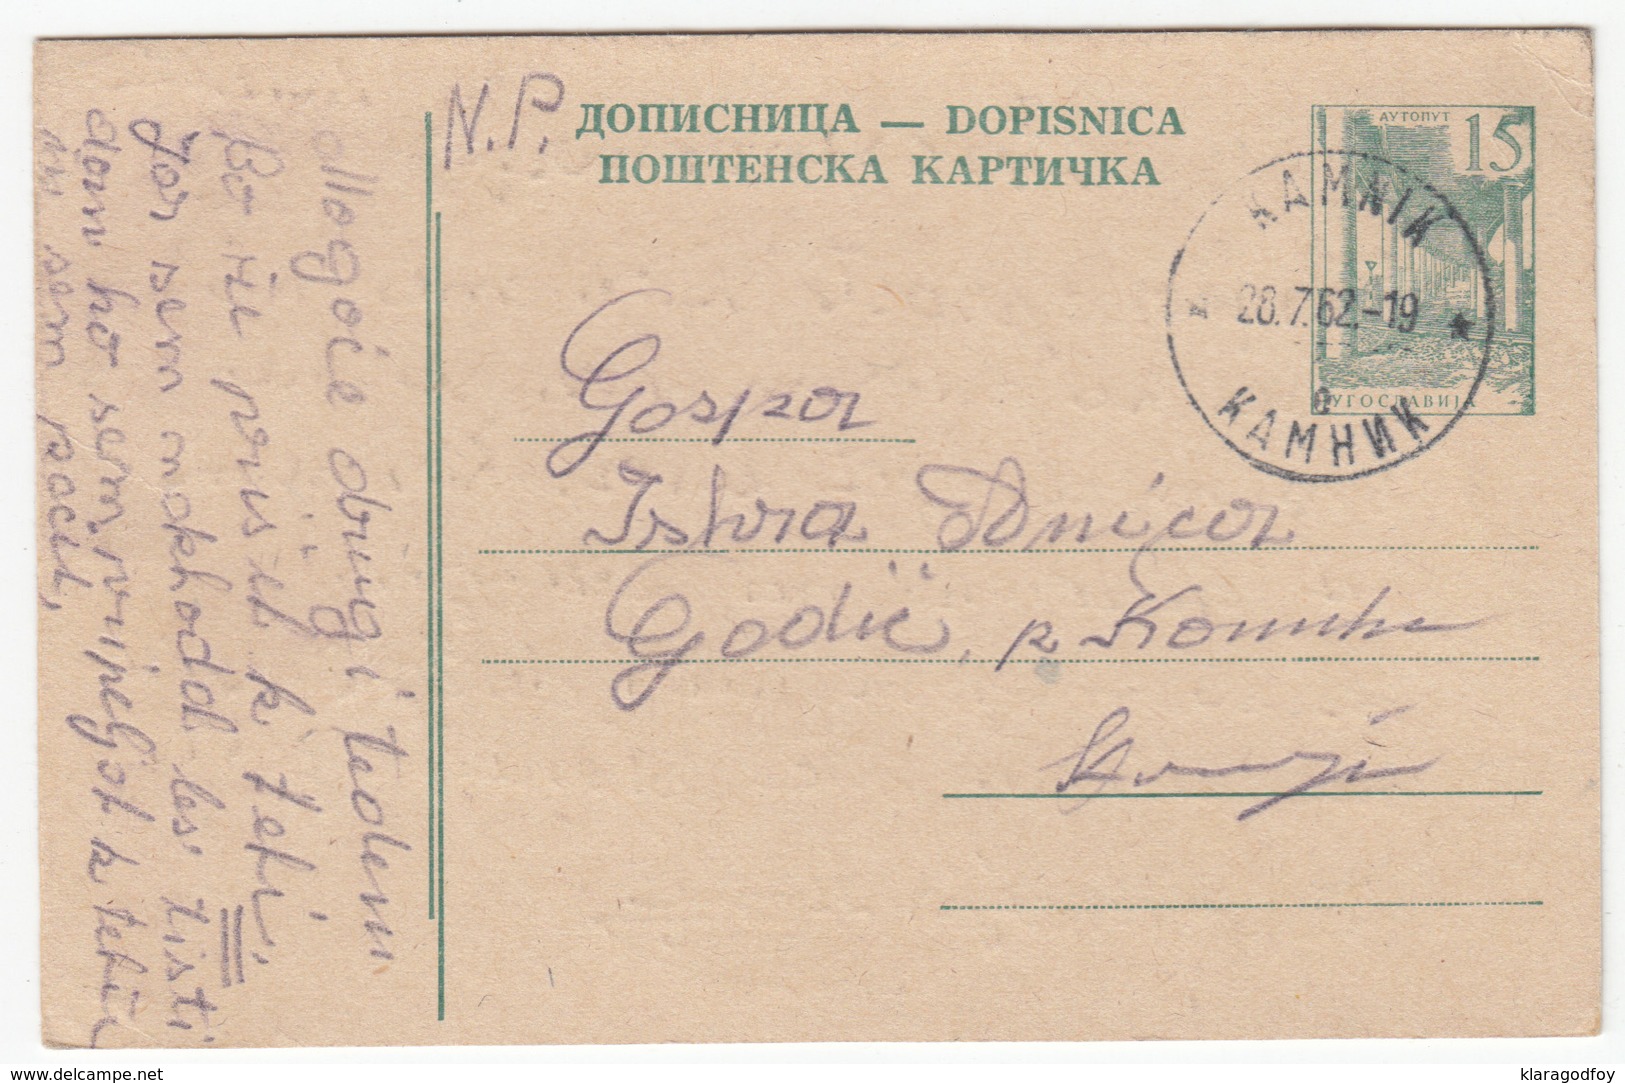 Yugoslavia Postal Stationery Postcard Dopisnica Travelled 1962 Kamnik B170310 - Postal Stationery